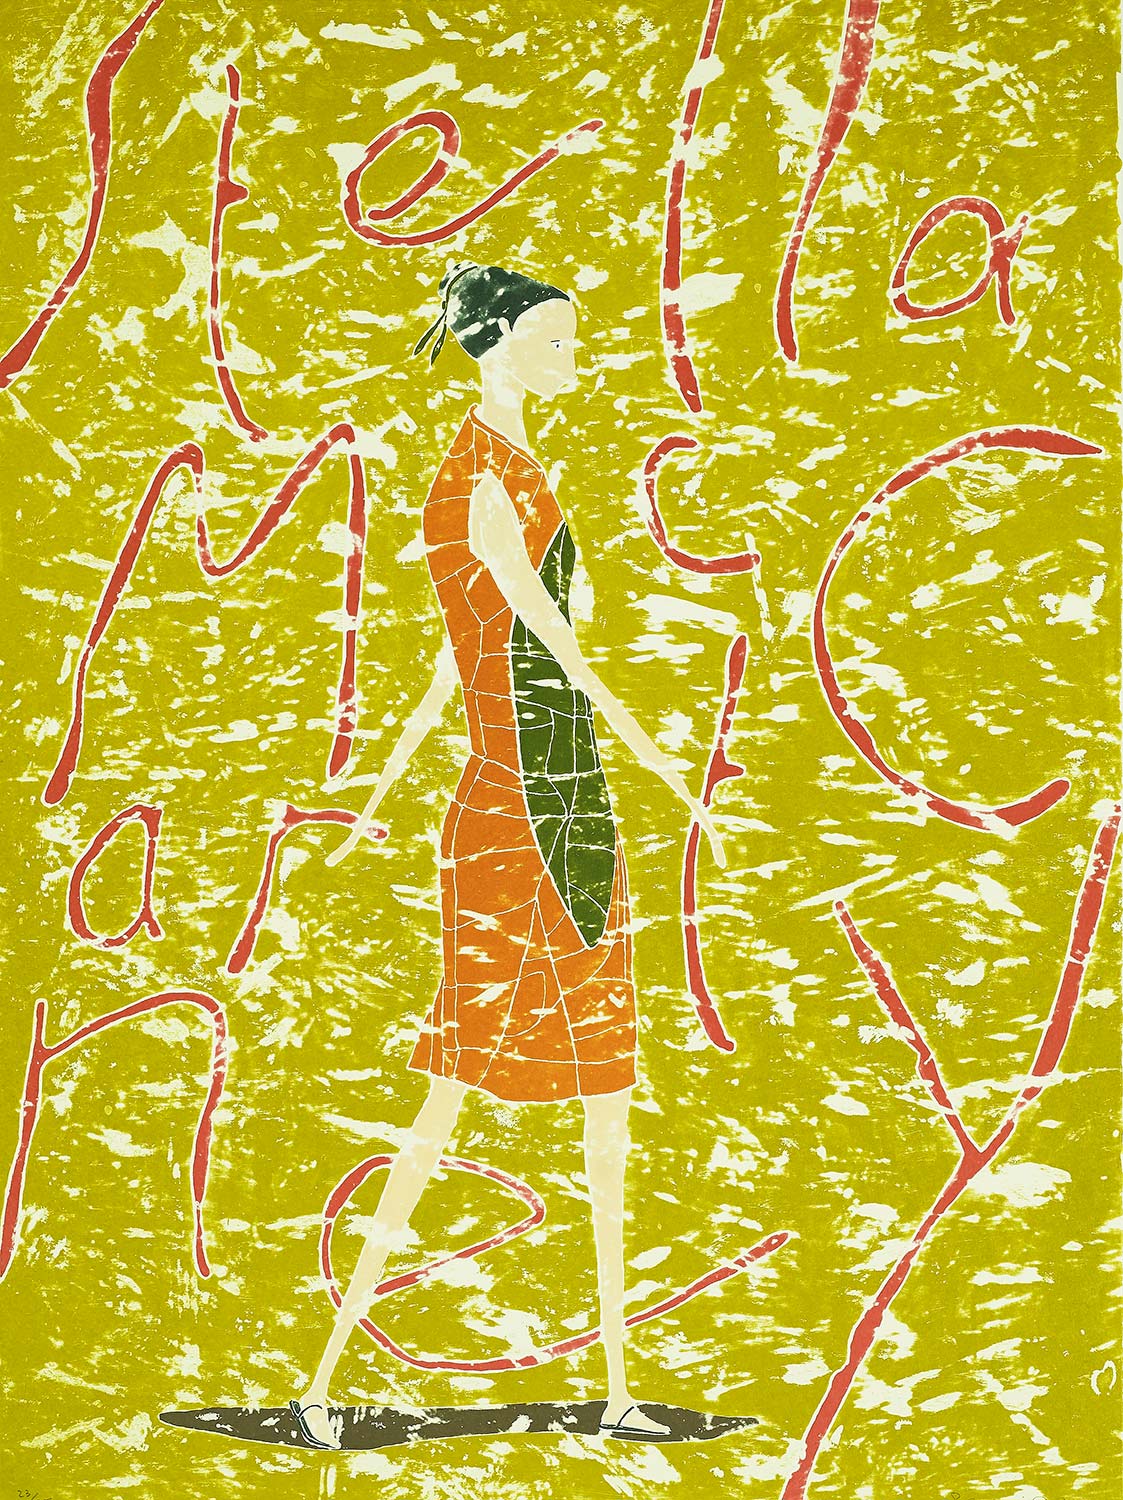 The Fashion House (Stella McCartney), 76 x 56 cm, Lithograph